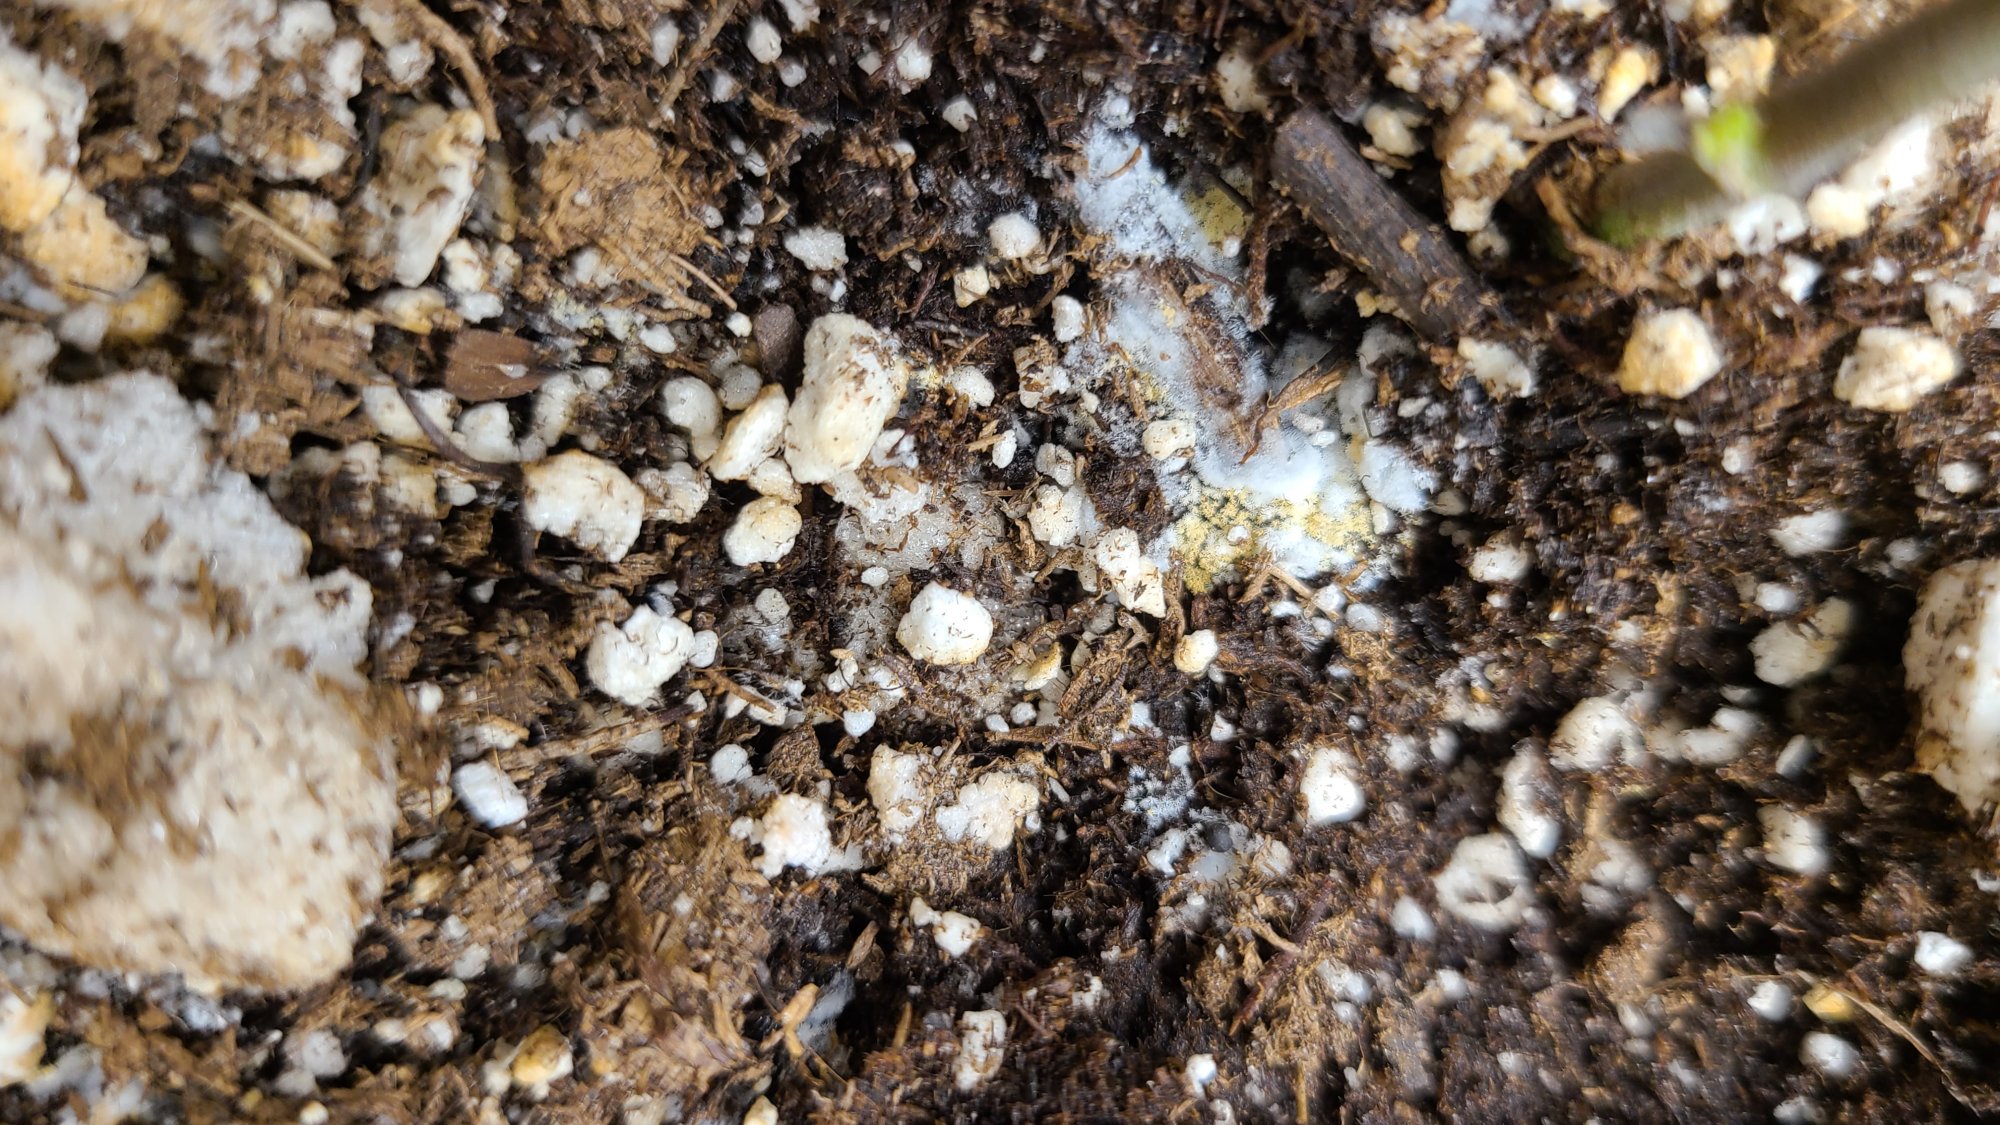 Growth on soilmold mycorrhizae mycelium